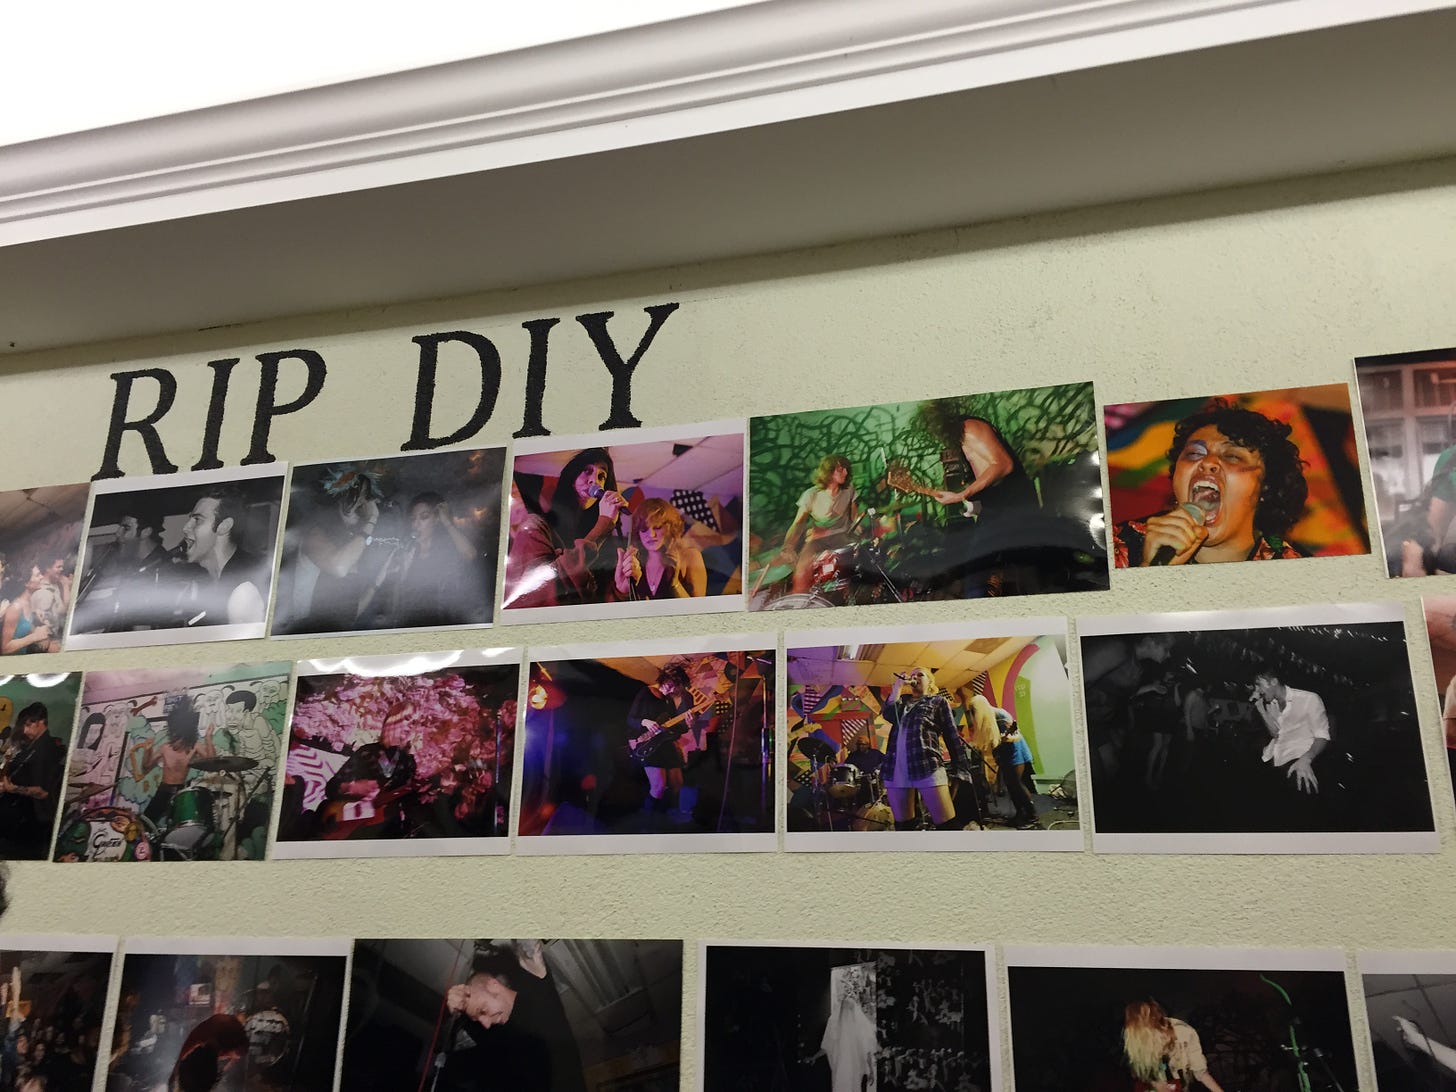 rip diy wall of photos at death by audio brooklyn nyc 2014